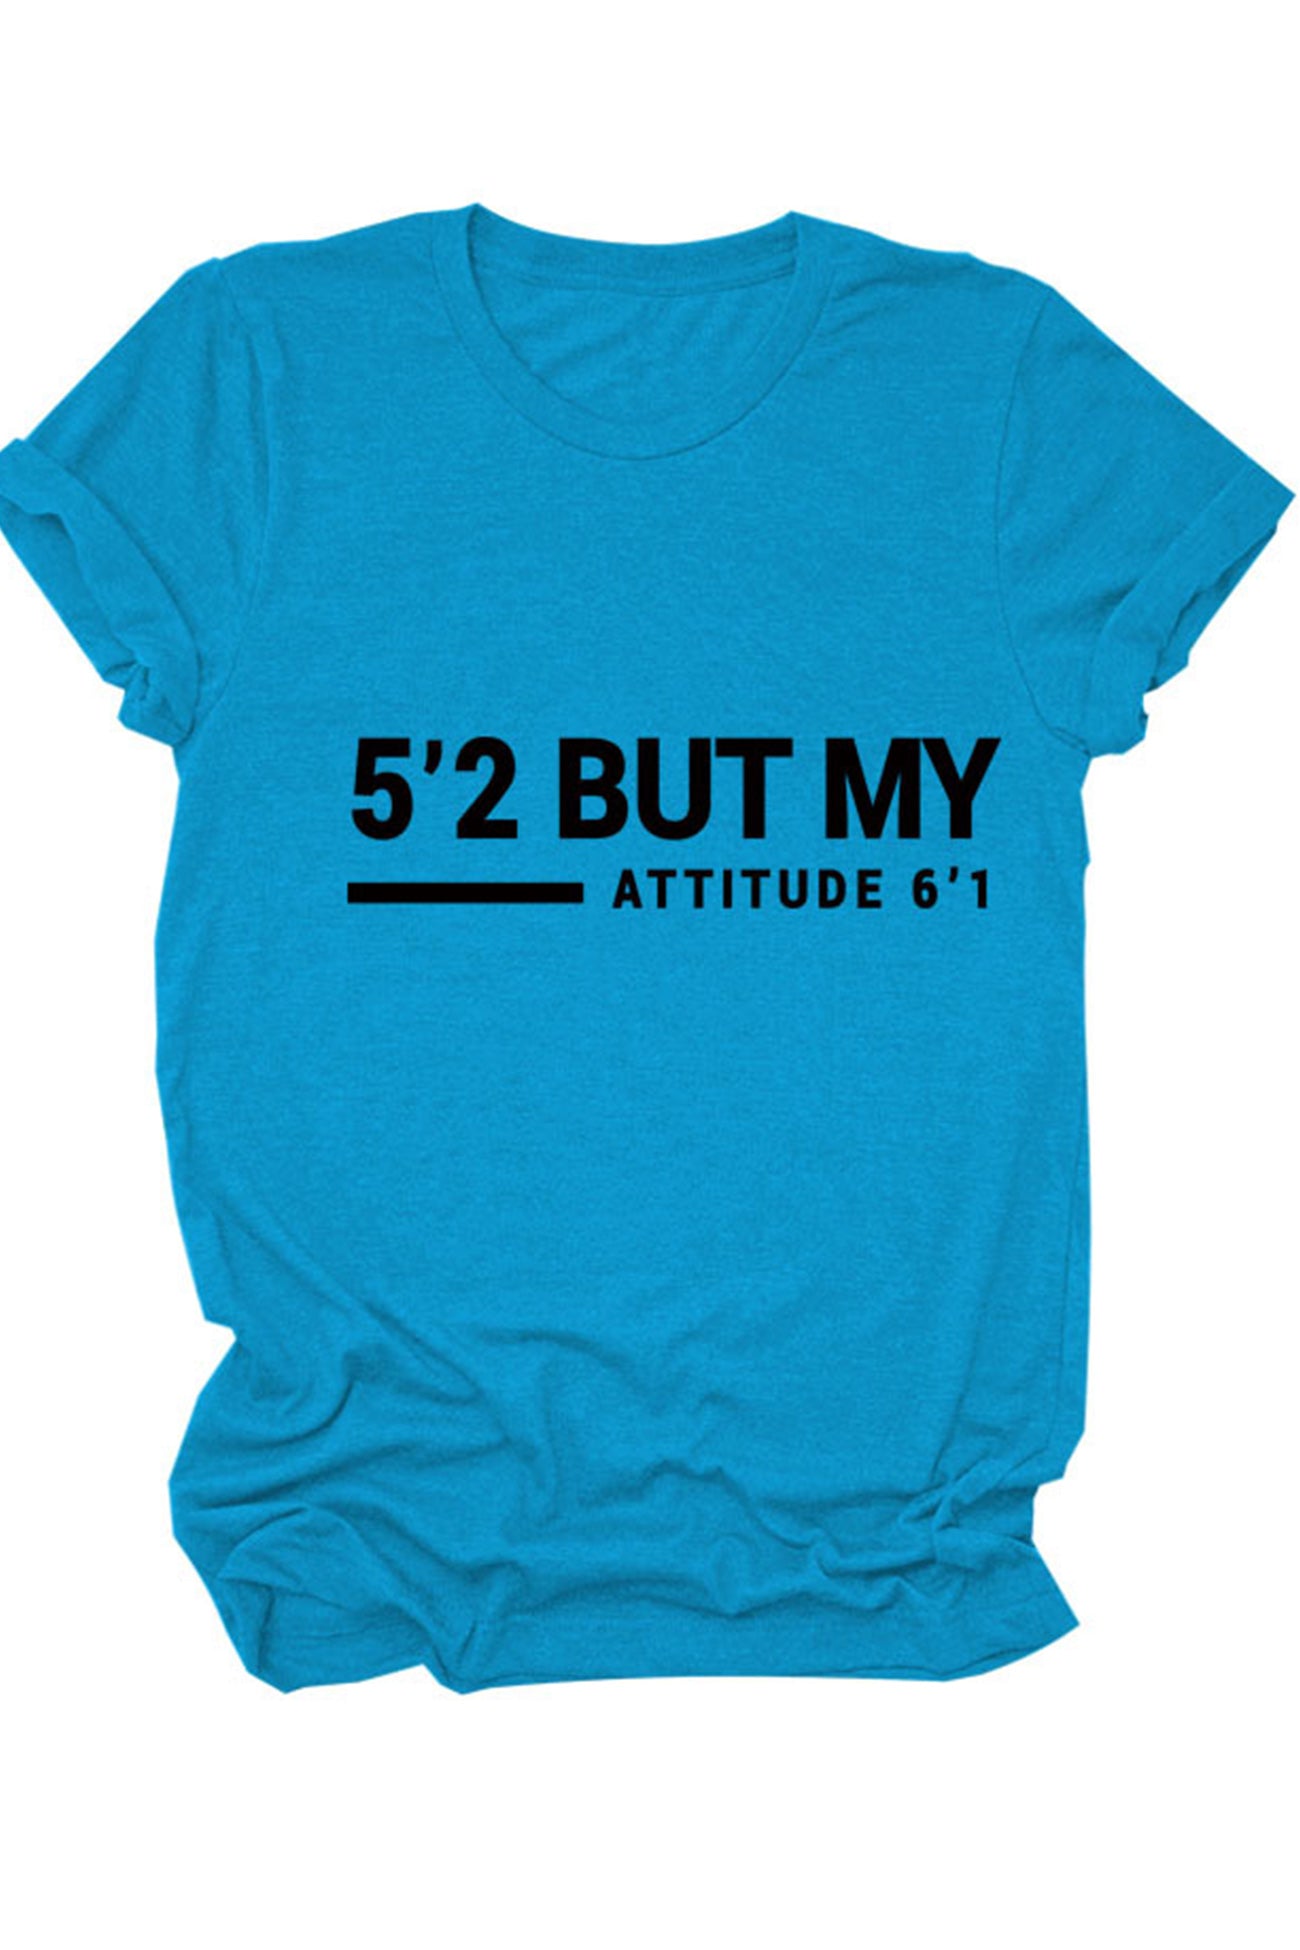 5'2 But My Attitude 6'1 Printed Shirt